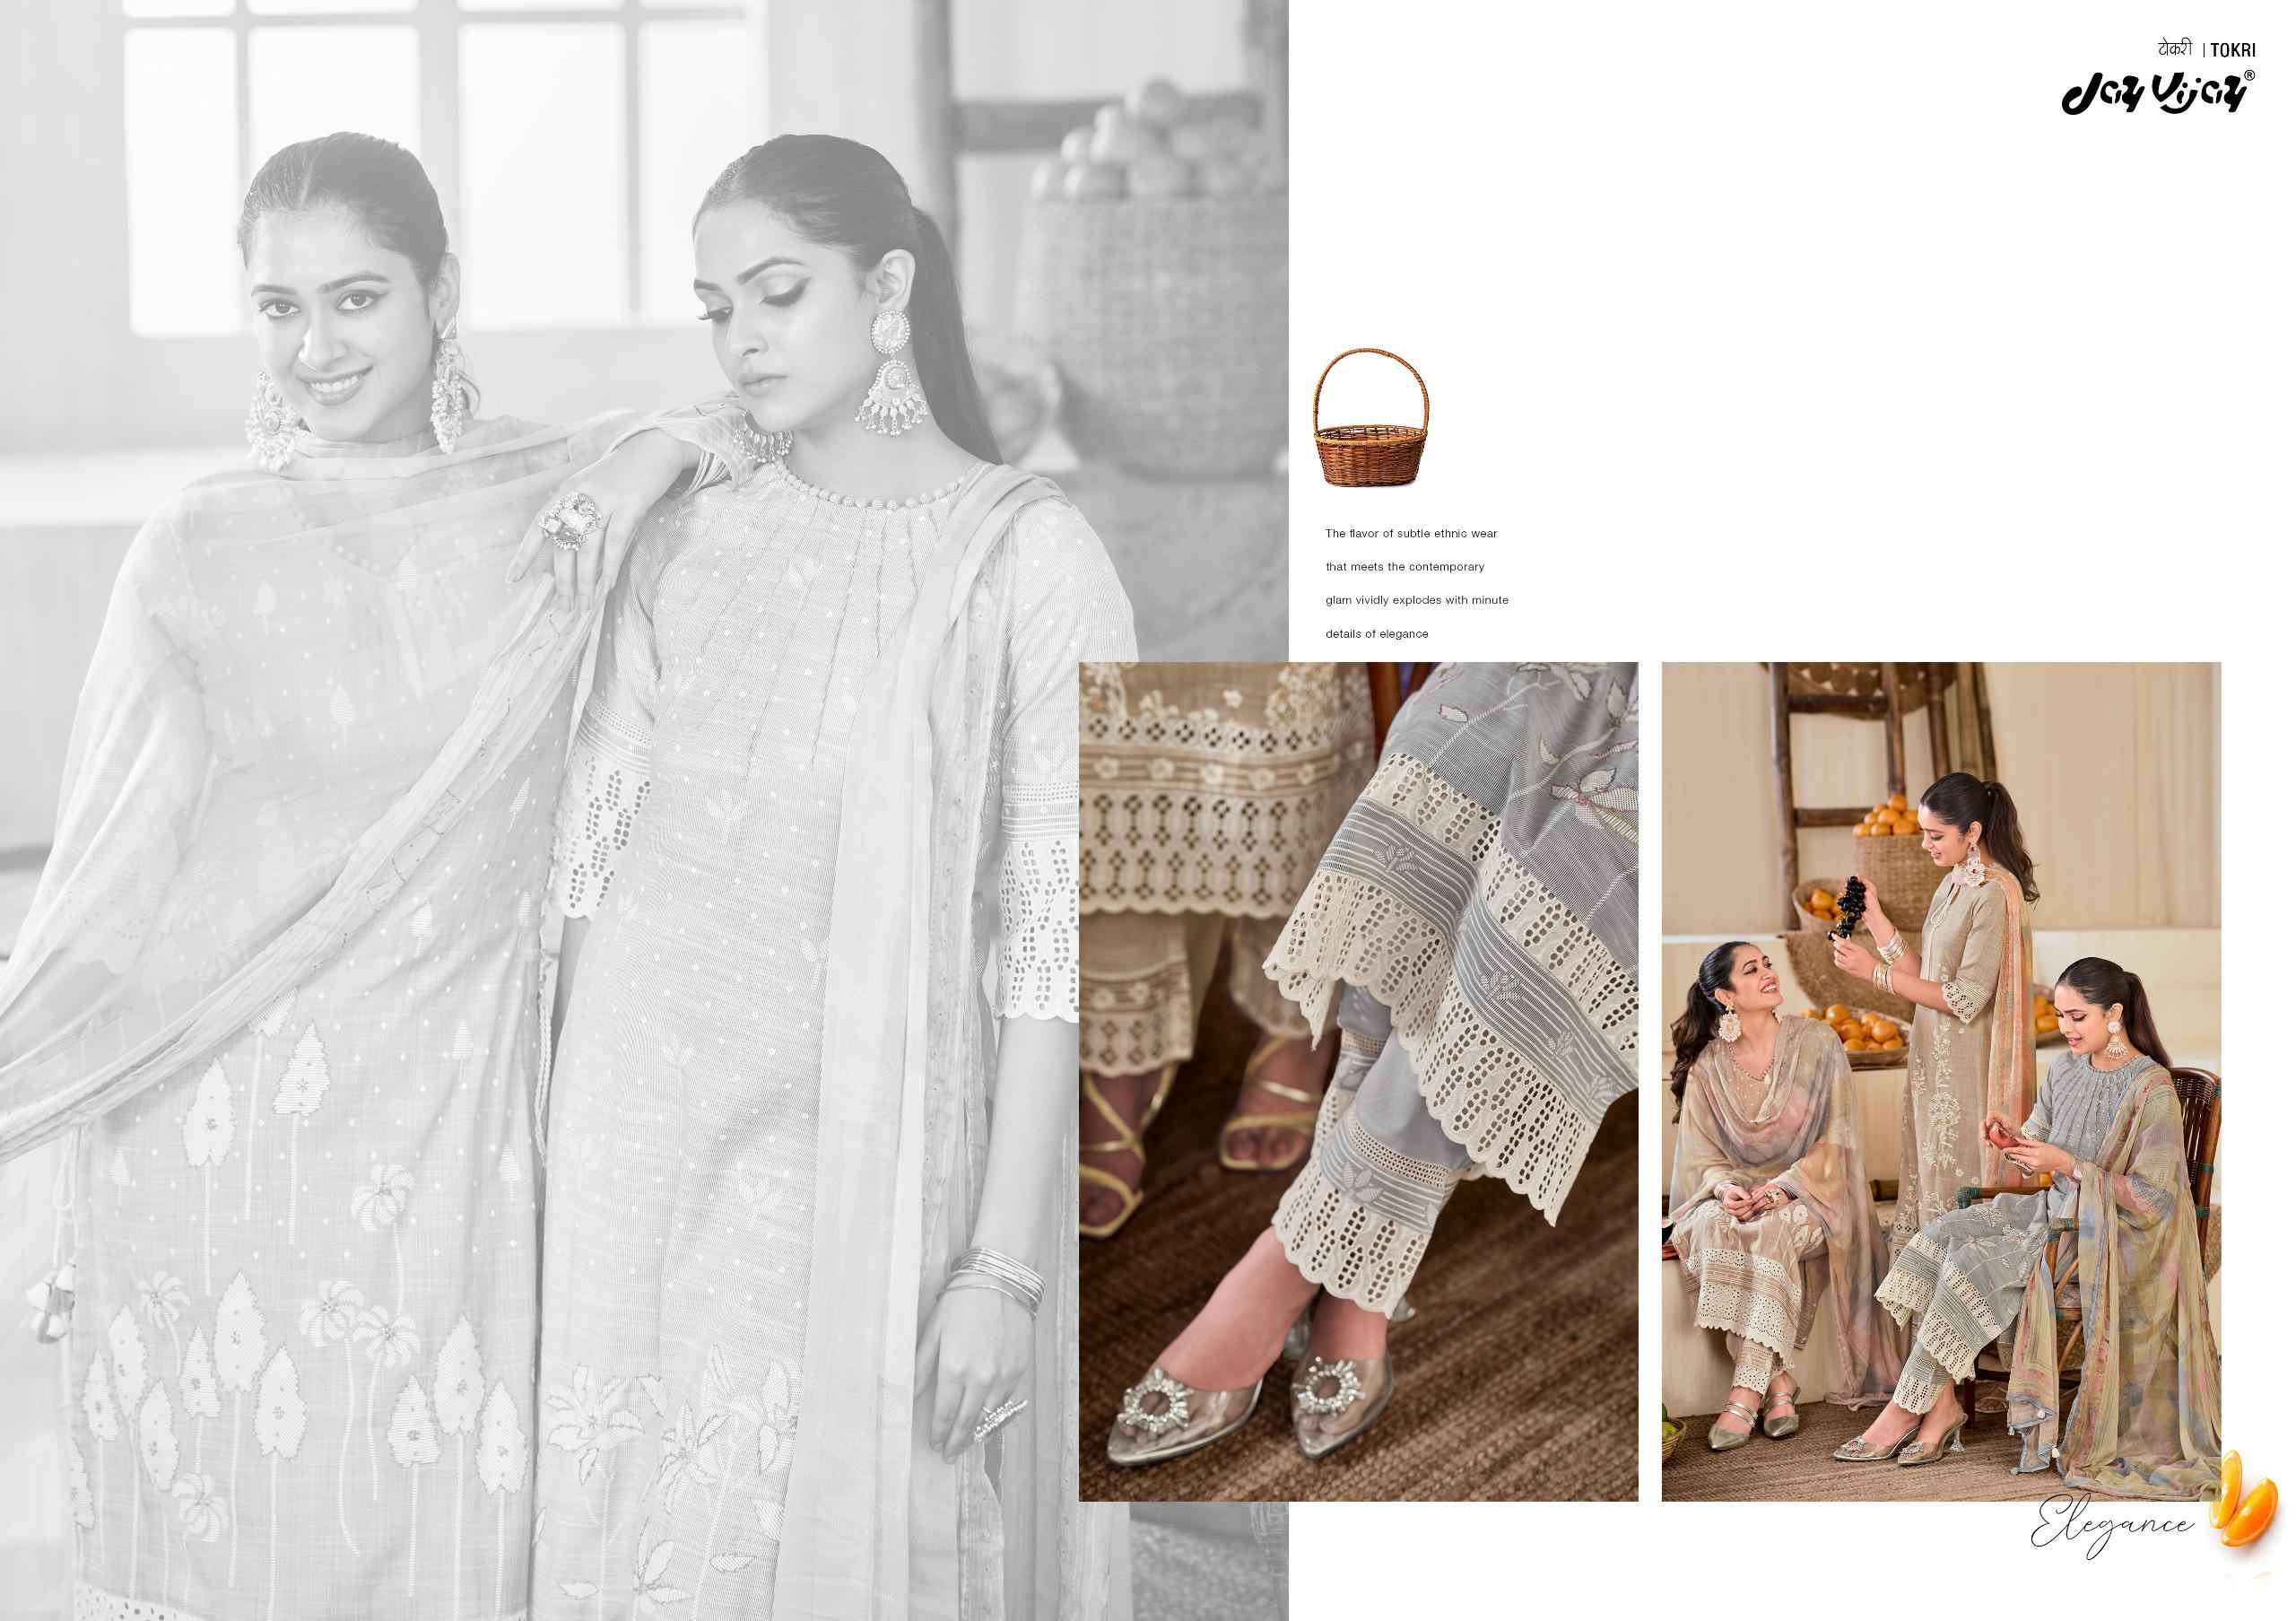 Jay Vijay Tokri Pure South Cotton Dress Material (5 pcs Catalogue)